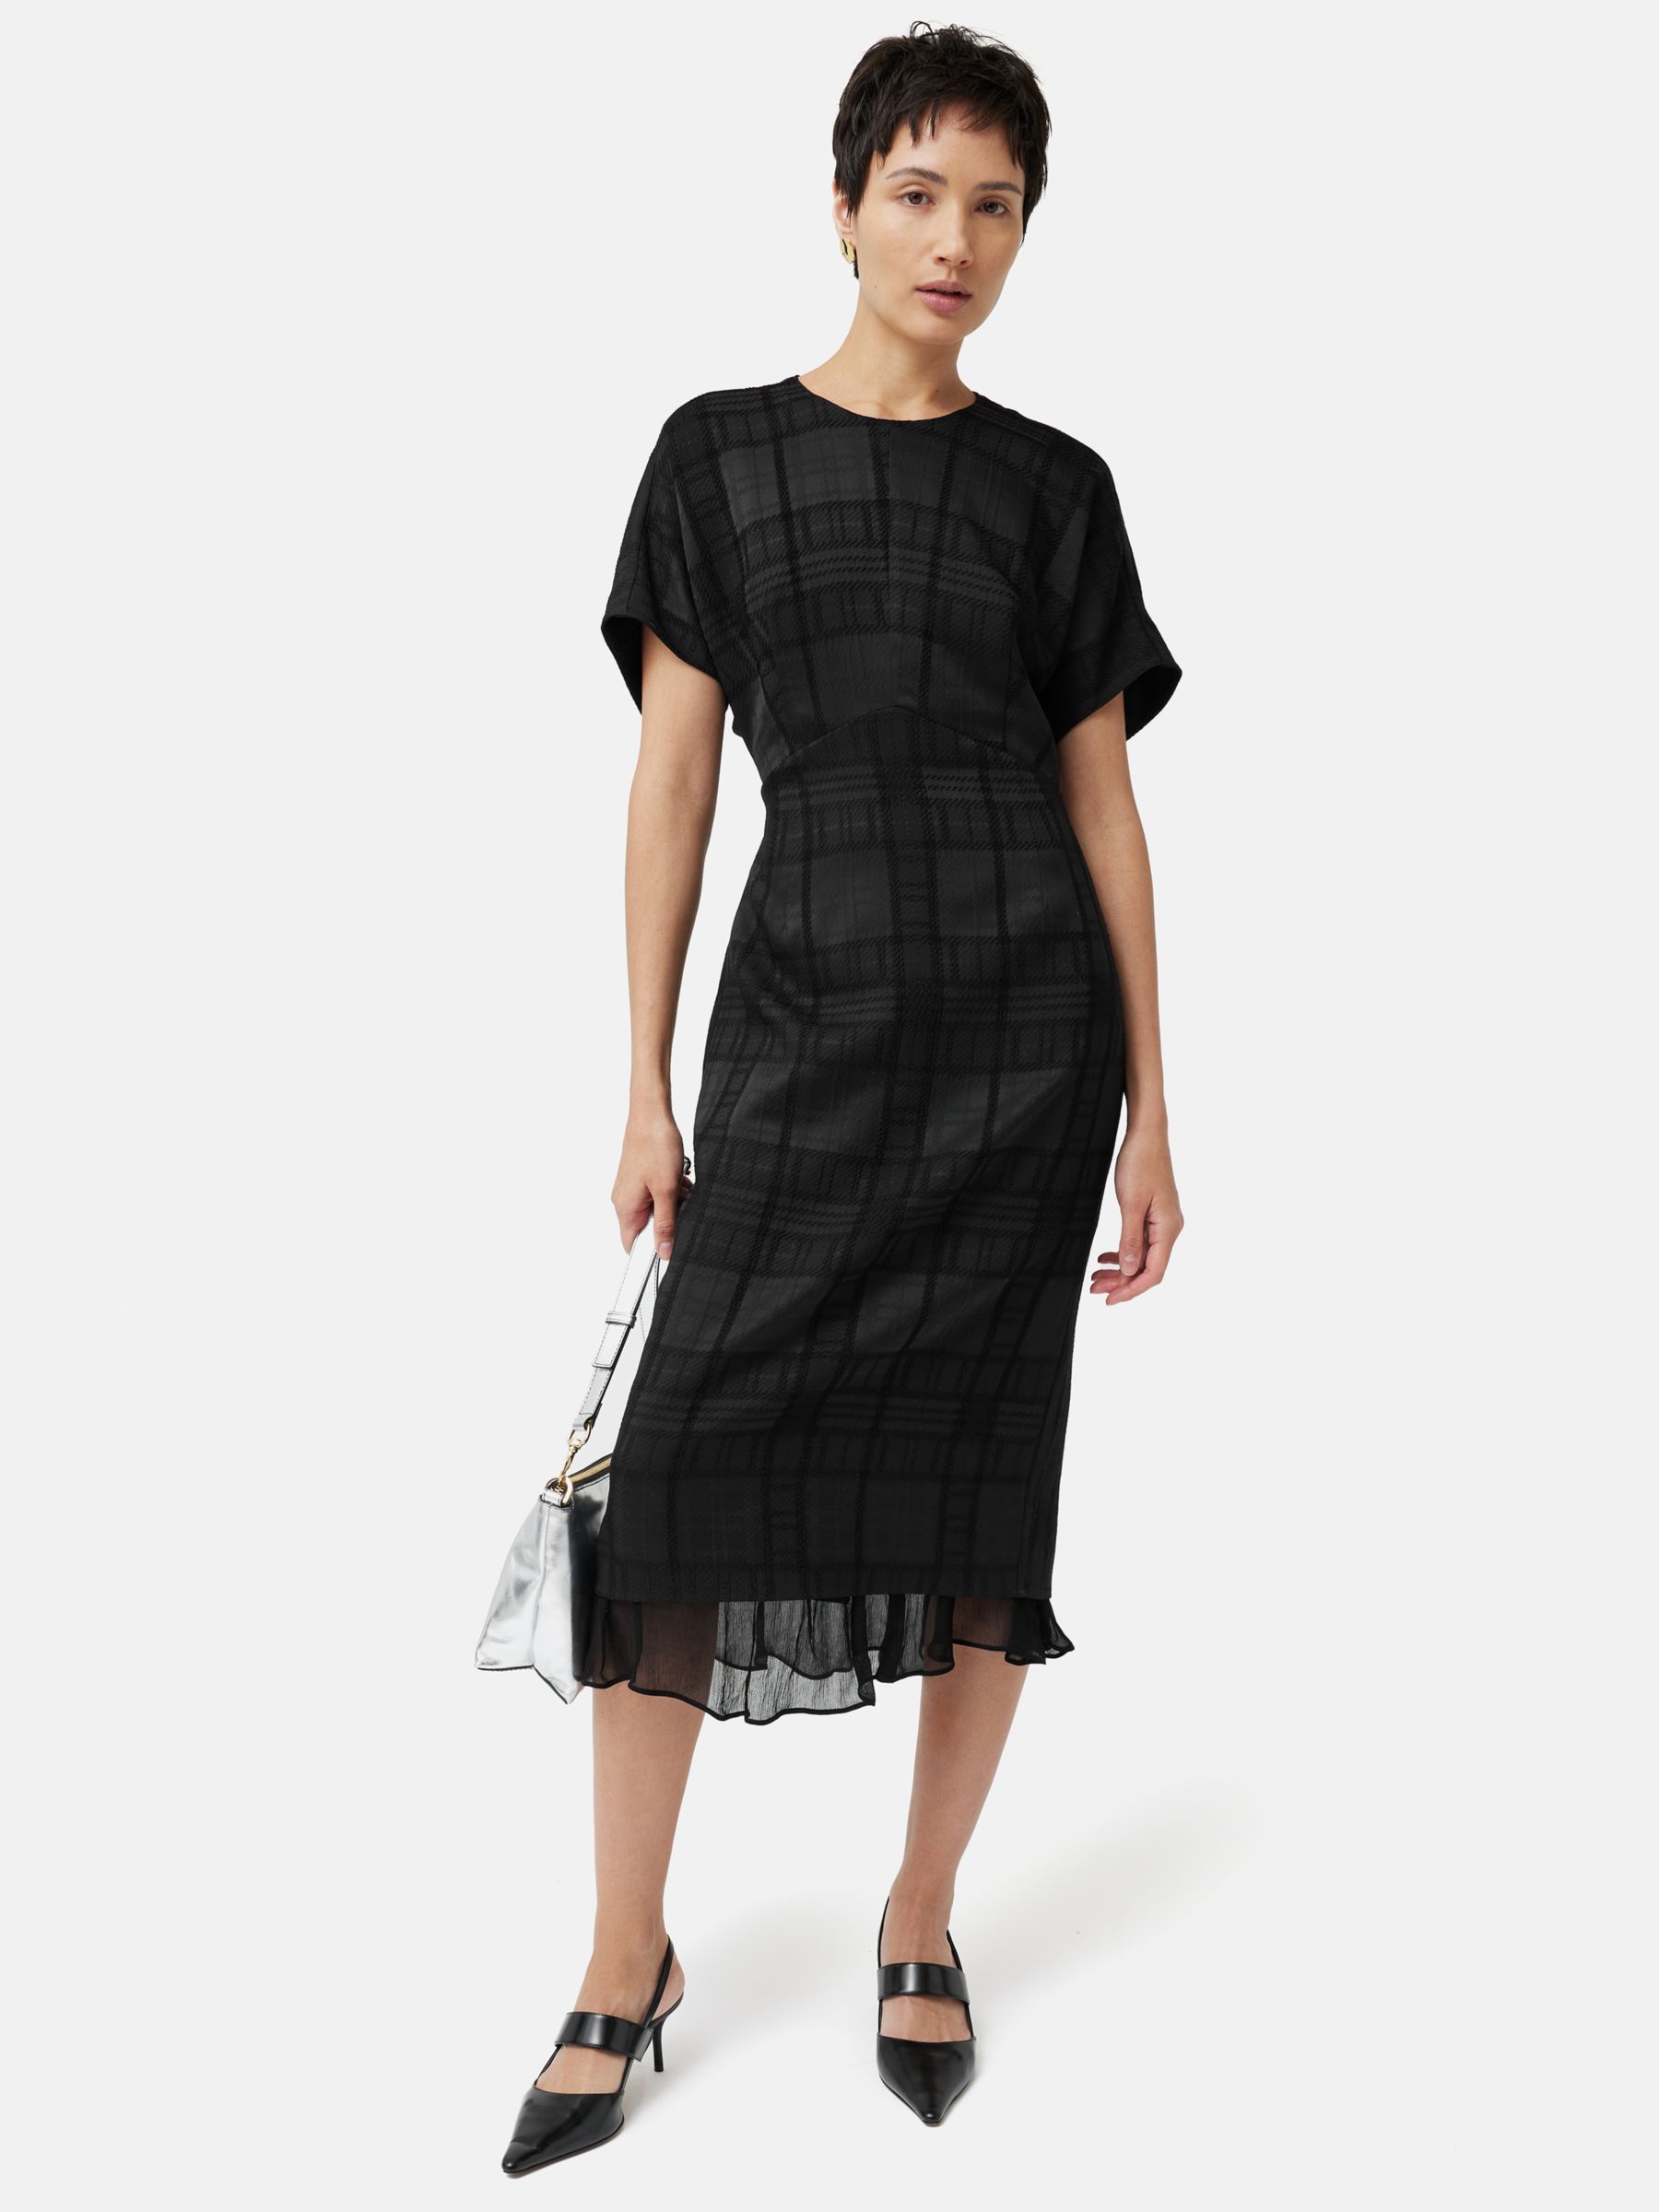 Jigsaw Textured Jacquard Check Midi Dress, Black at John Lewis & Partners